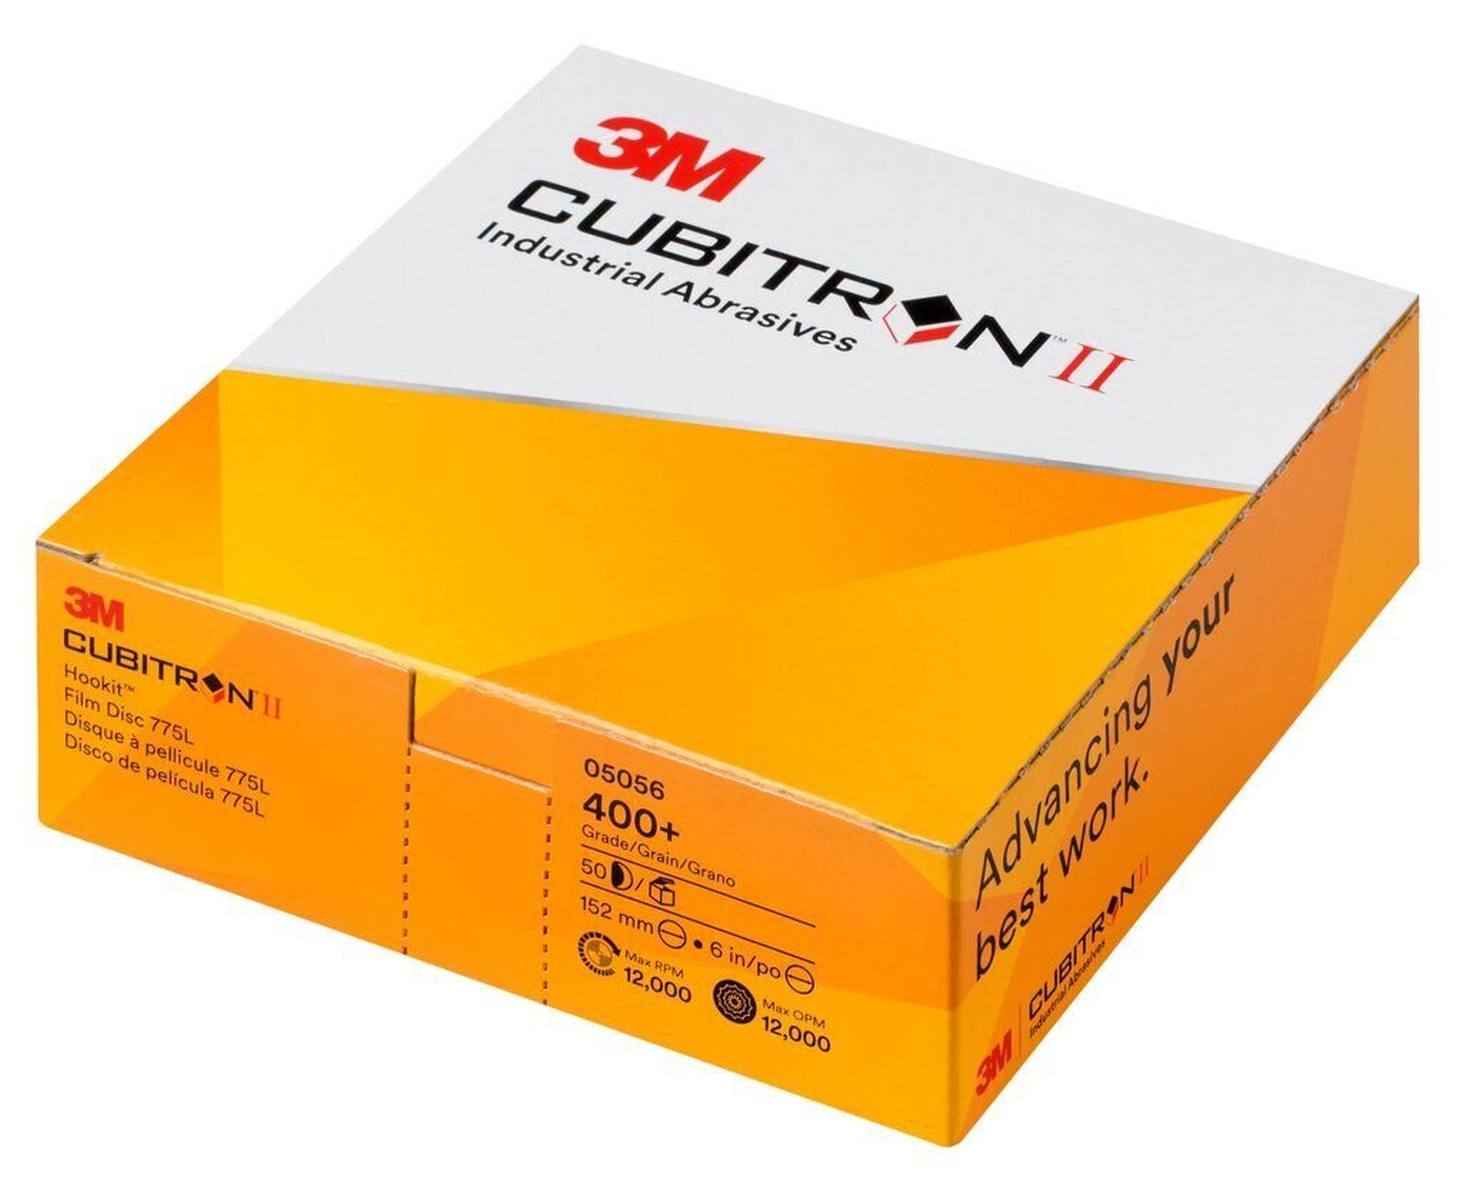 3M Cubitron II Hookit film disc 775L, 150 mm, 400+, multihole #05059